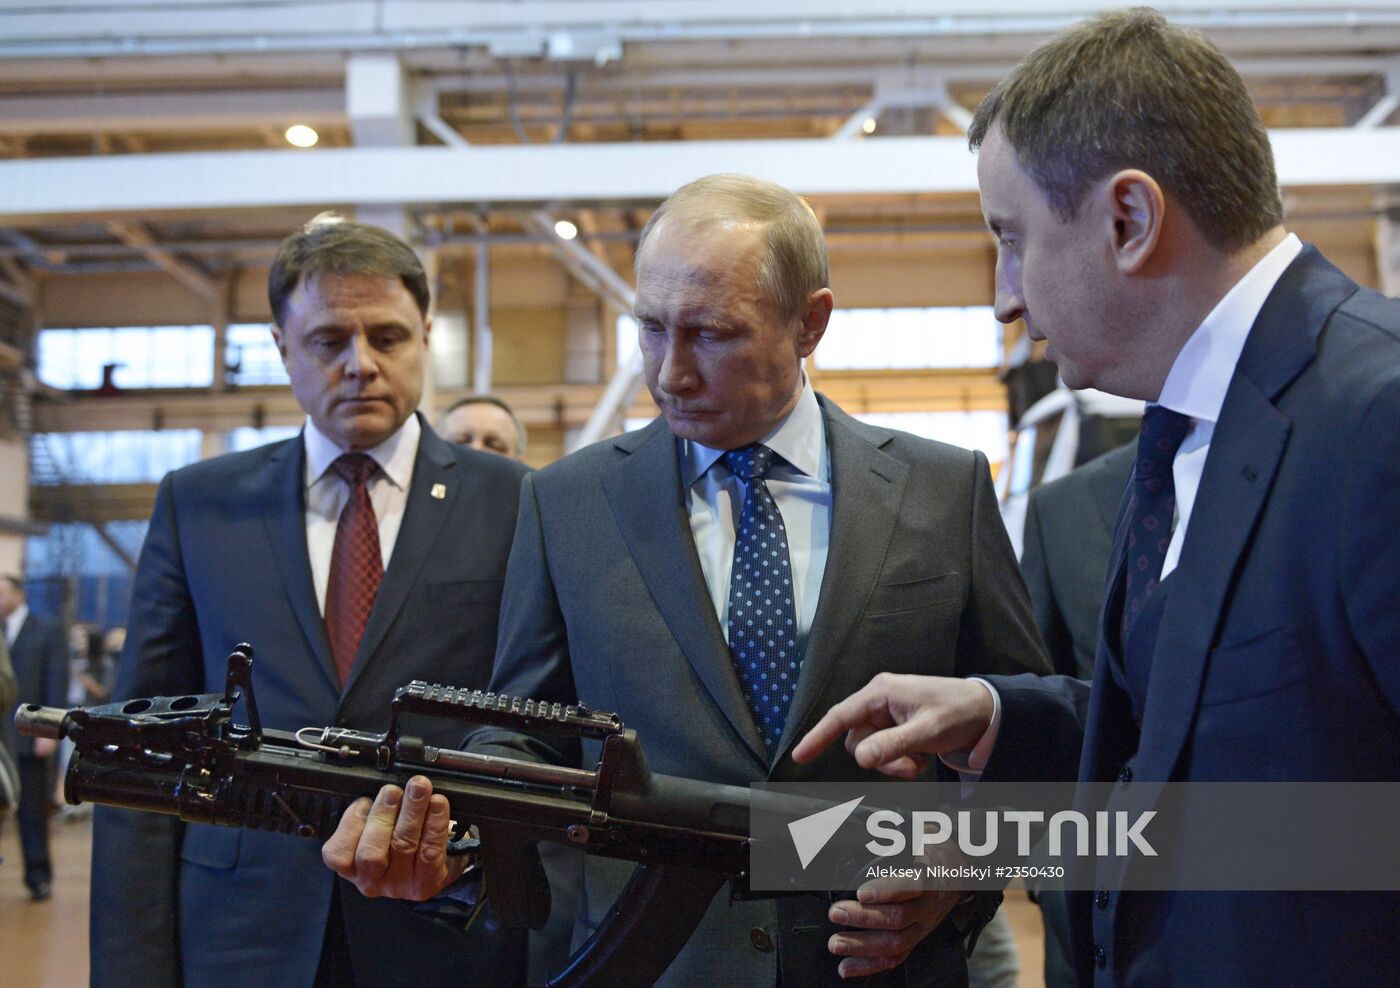 V.Putin's working visit to Tula Region